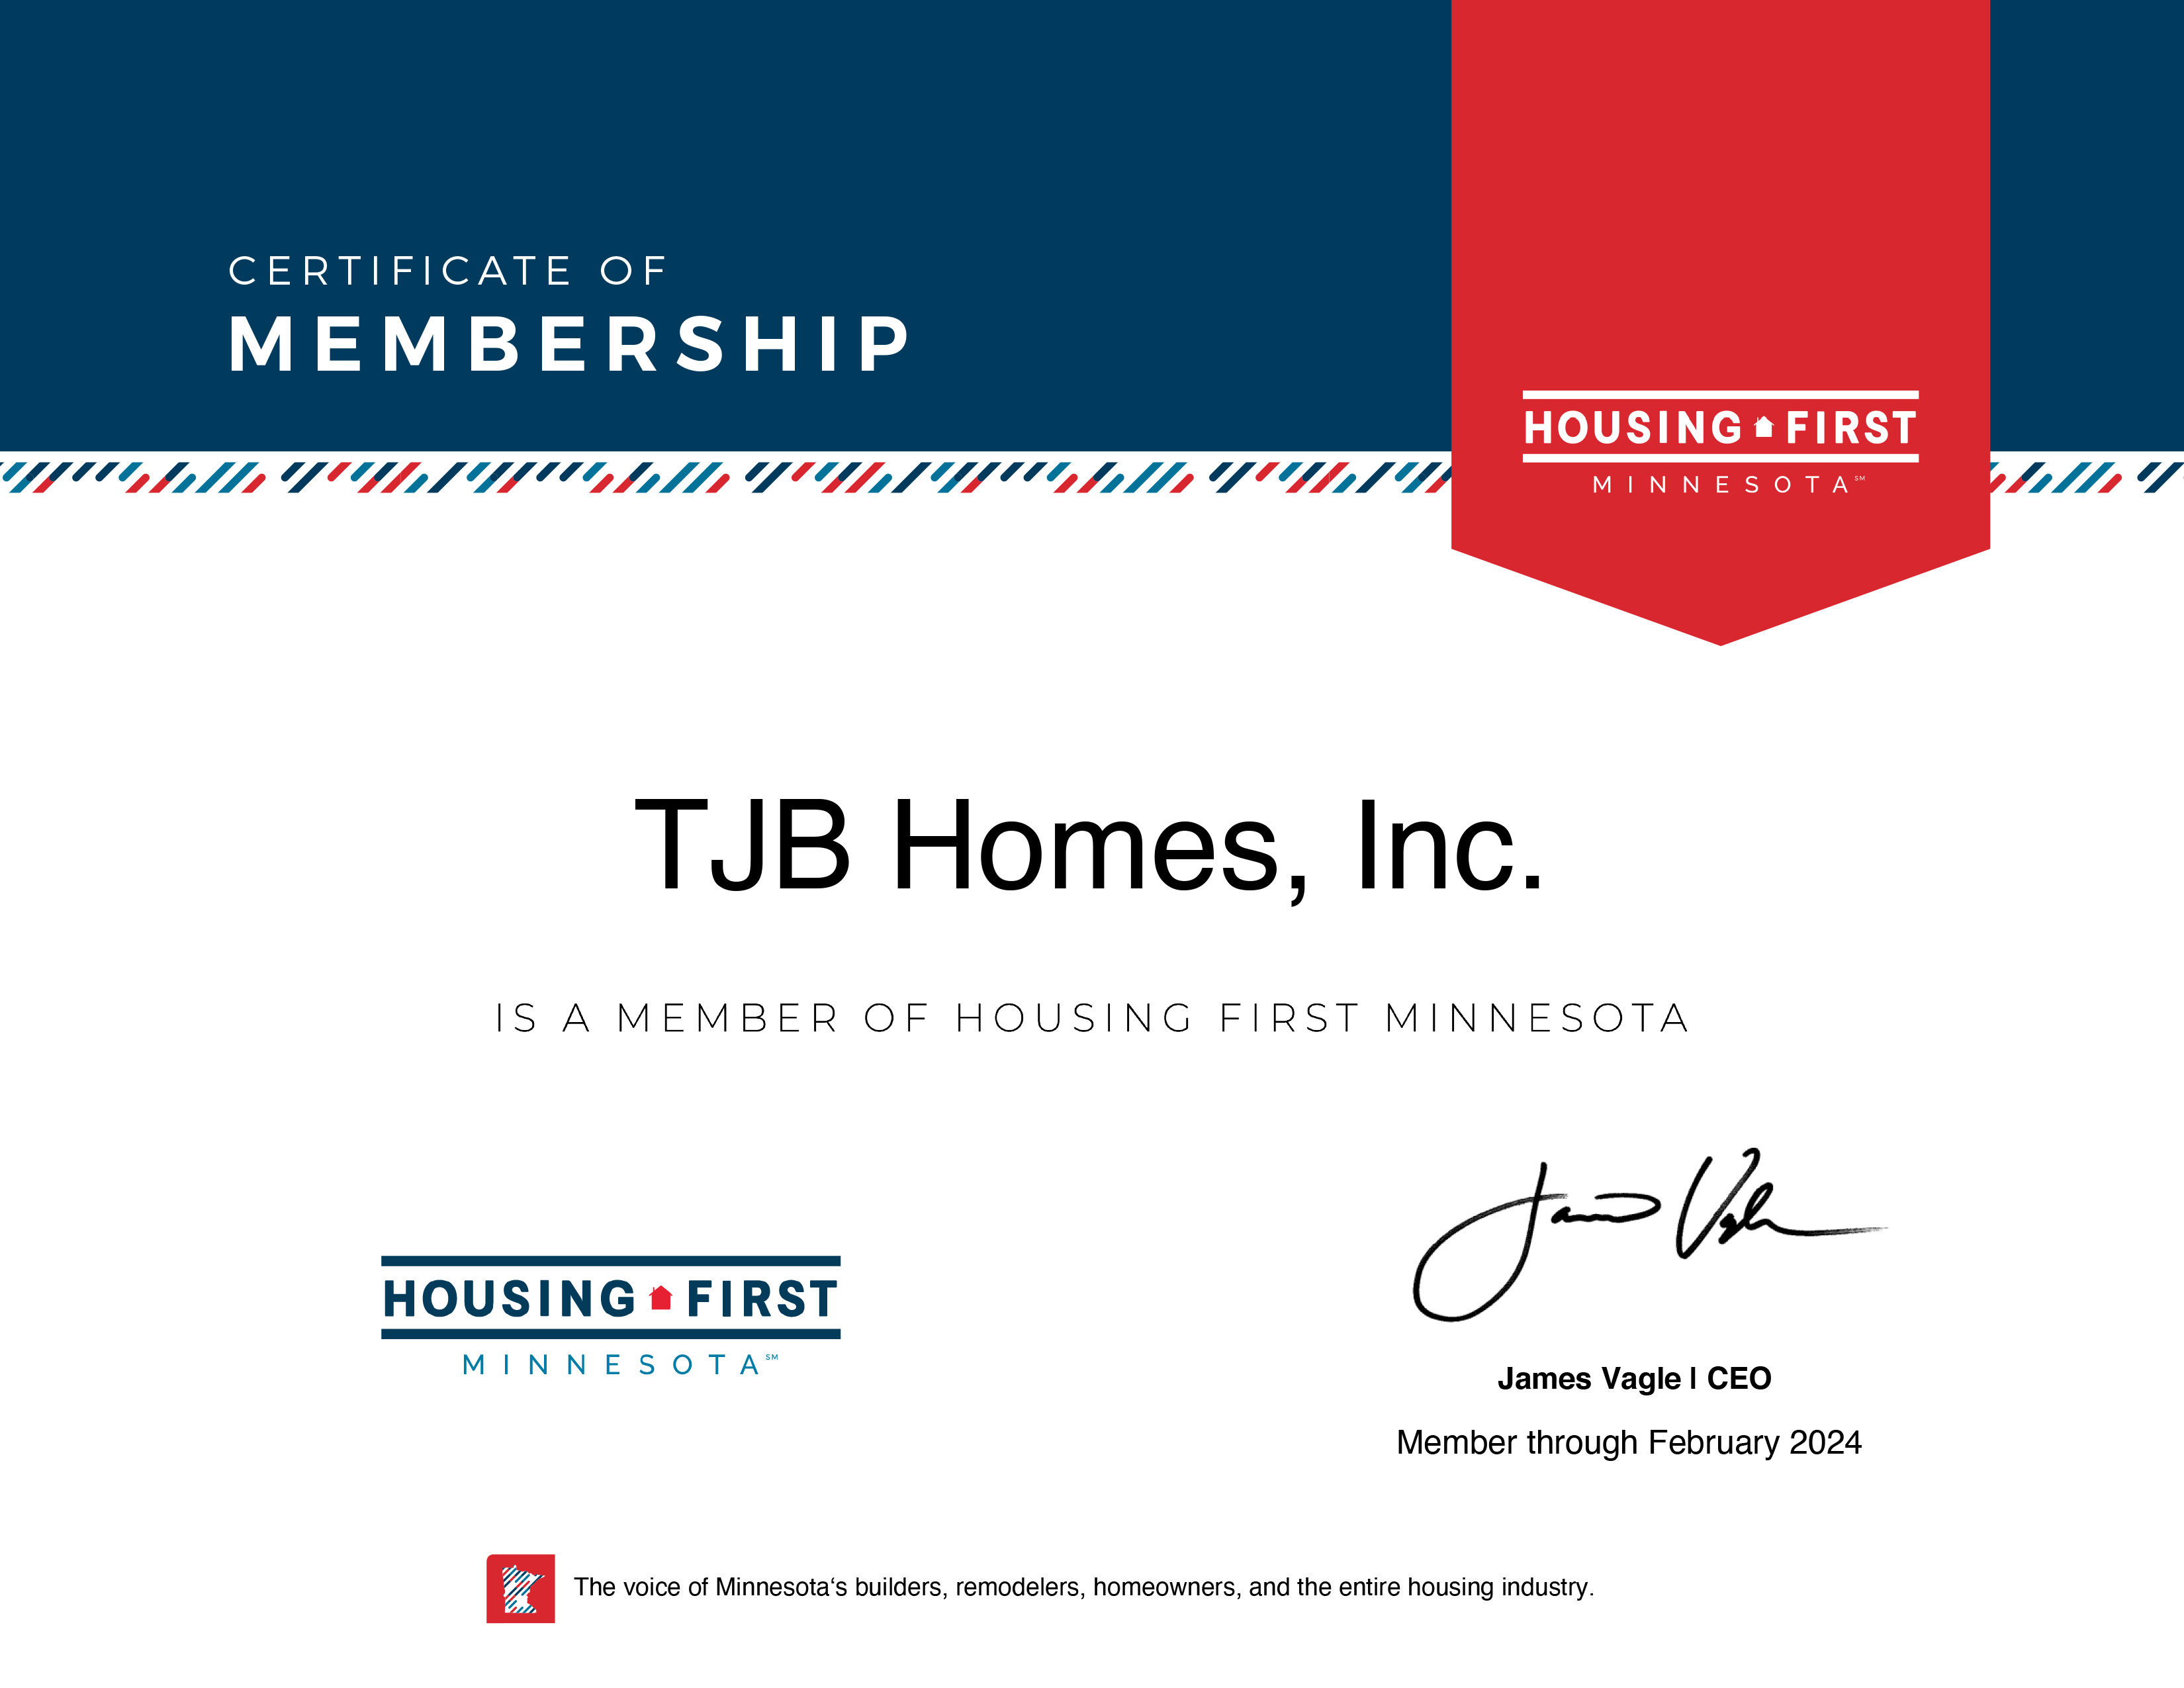 TJB Homes, Inc is a Member of Housing First Minnesota